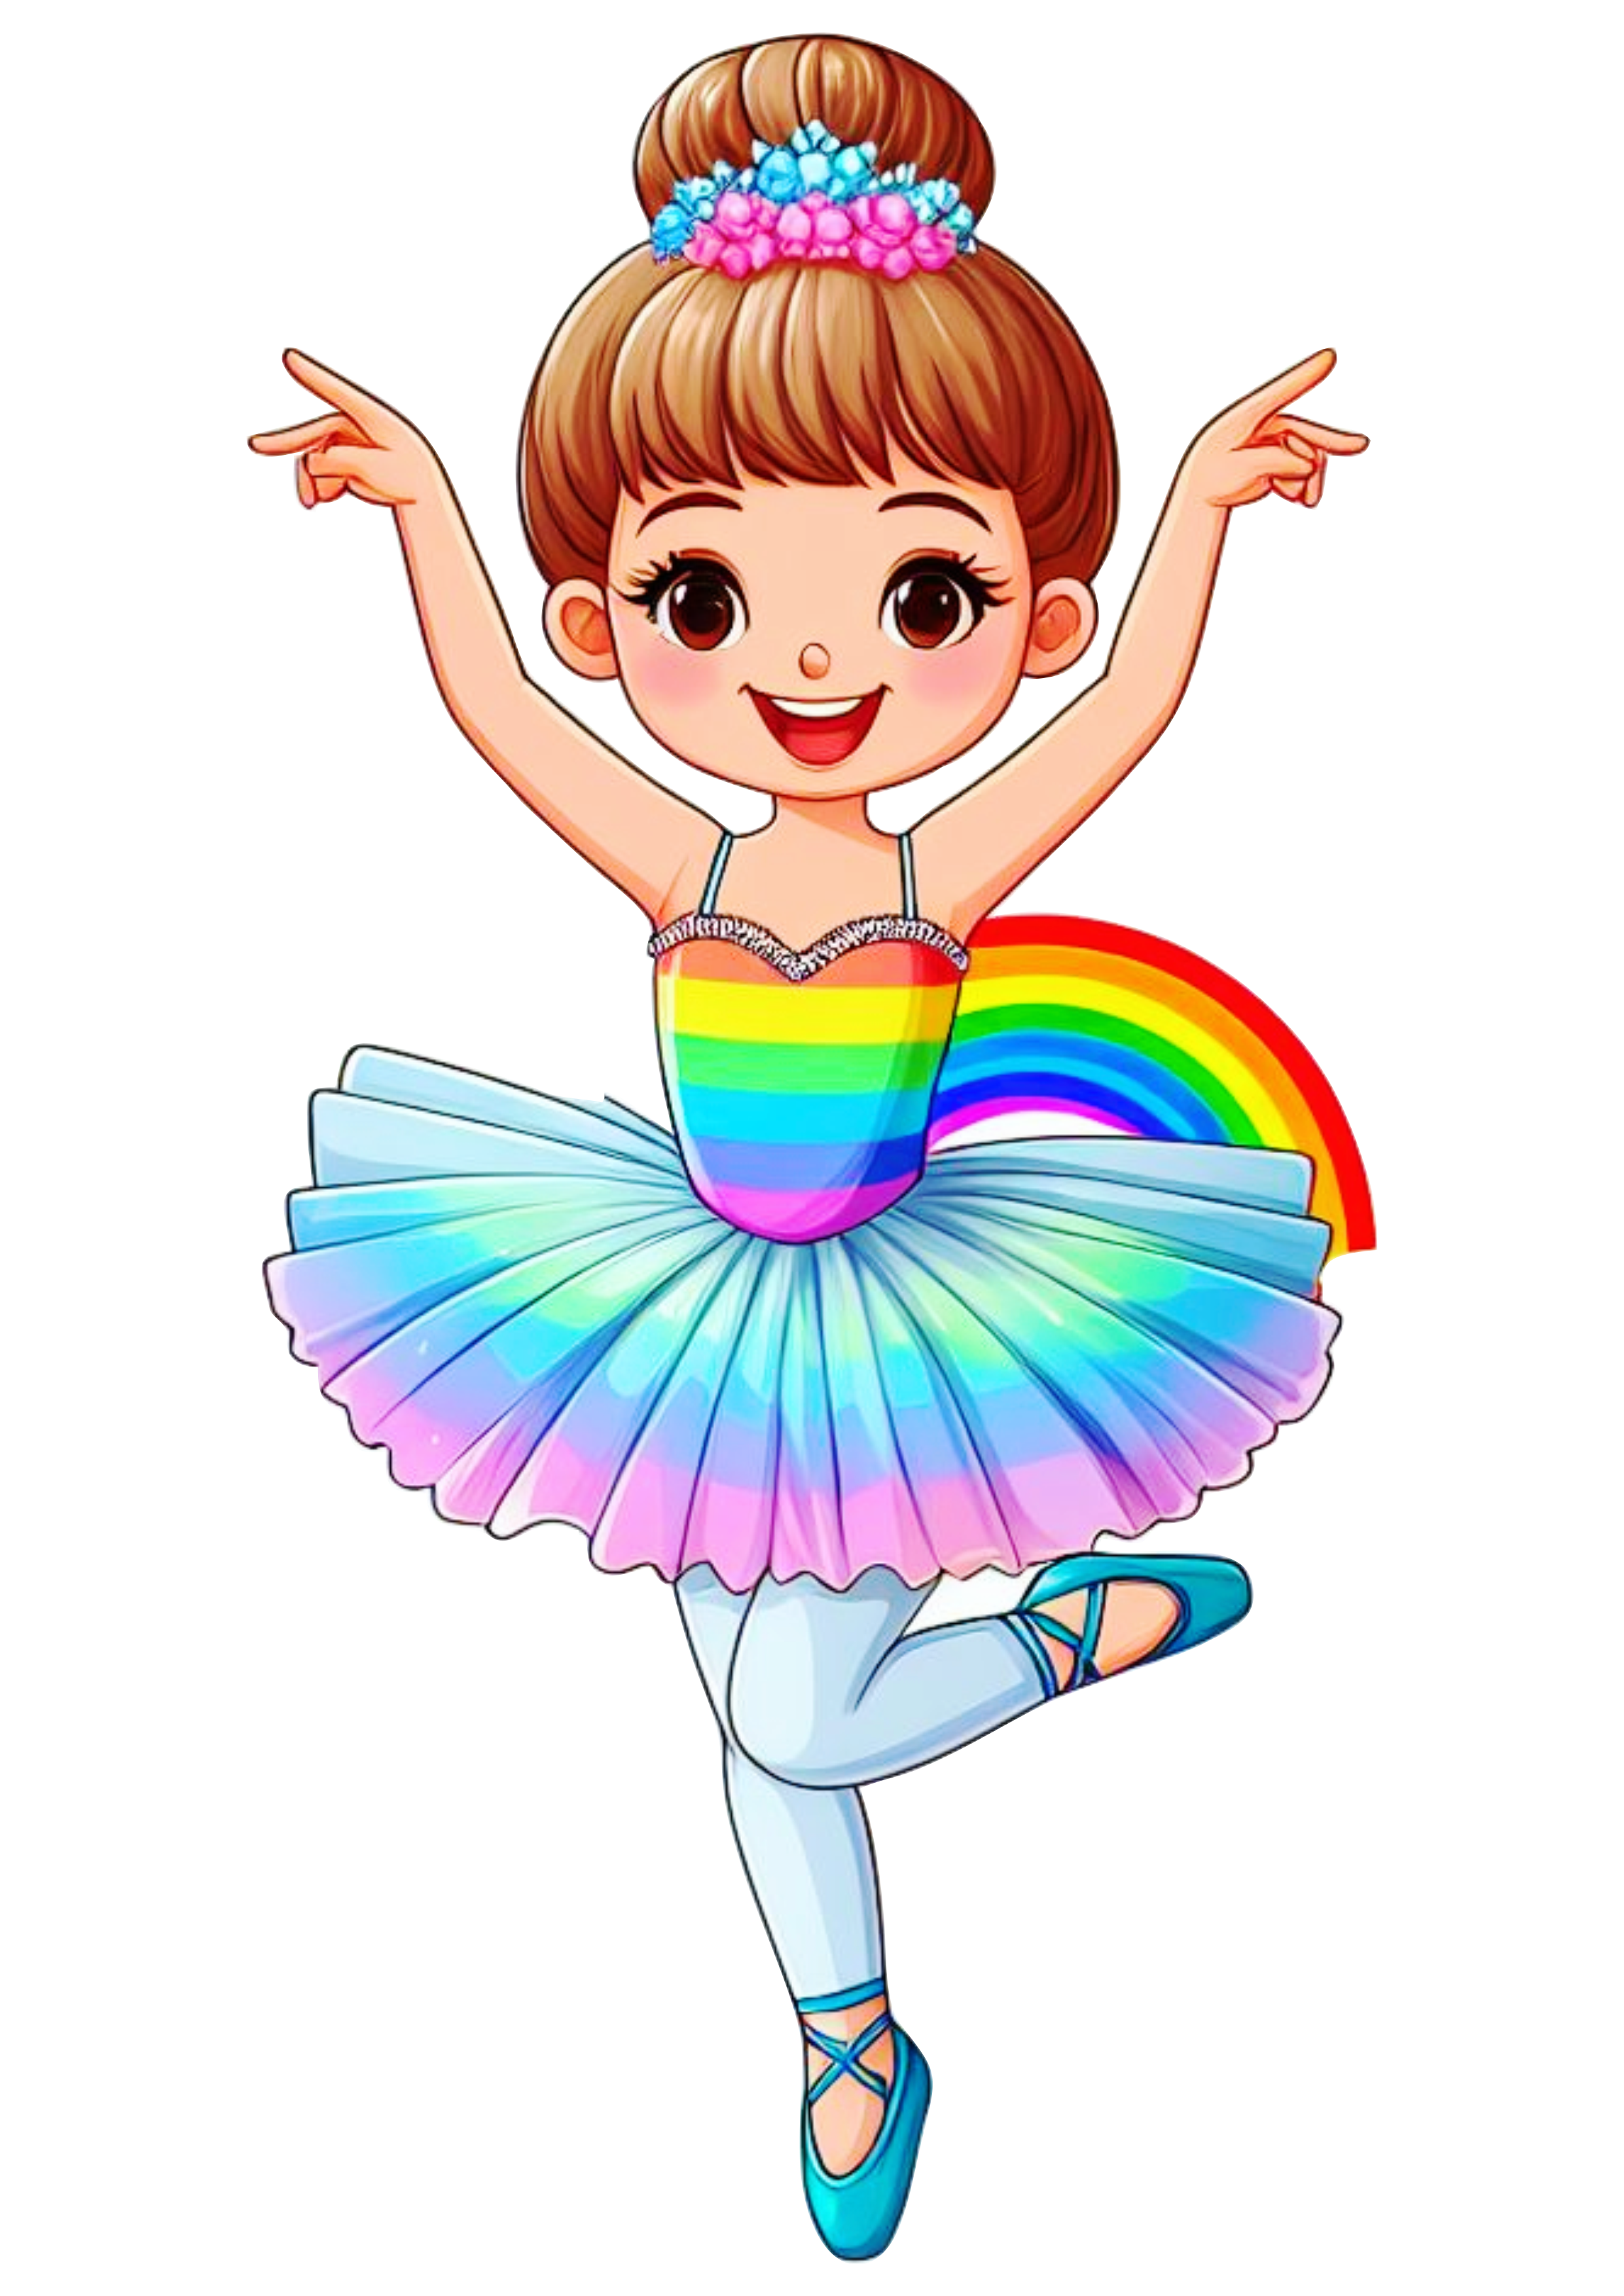 Bailarina menina com roupa colorida arco-íris desenho infantil png image design